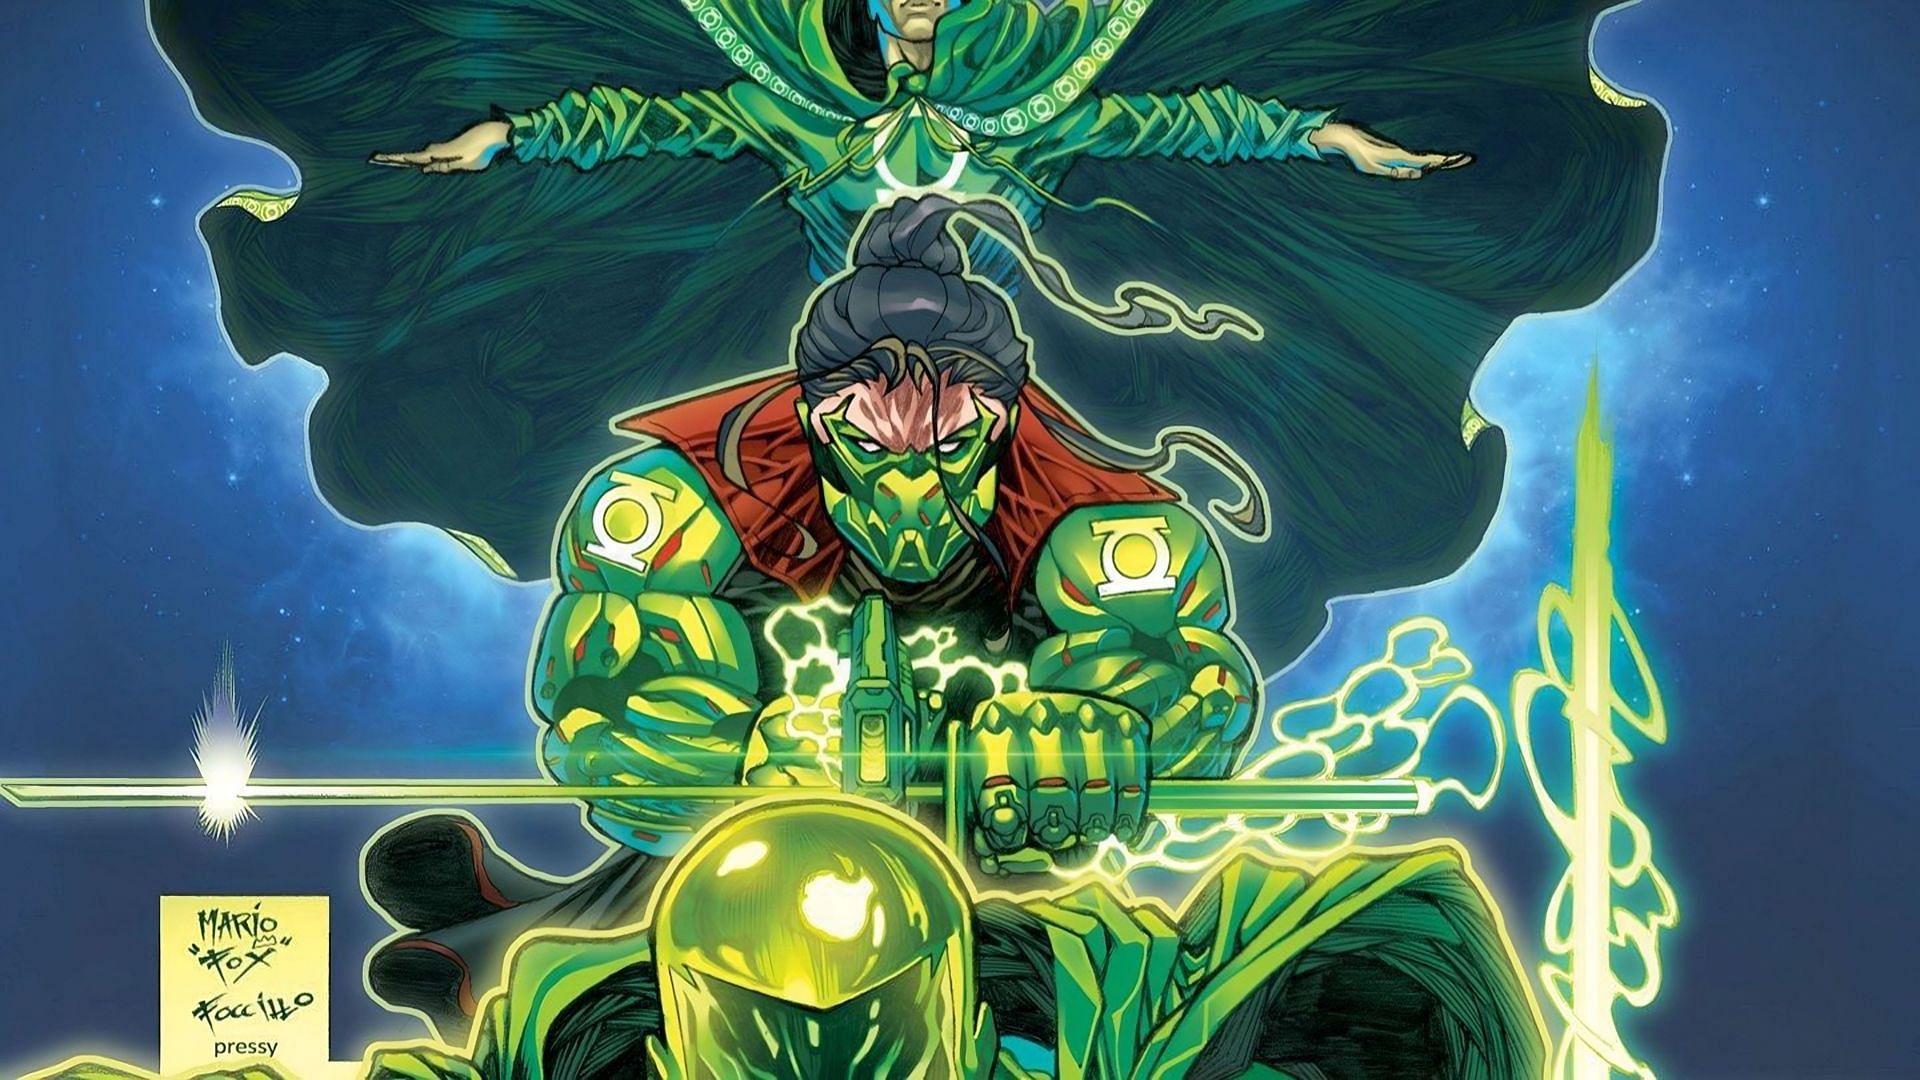 Jason Todd as Green Lantern (Image via DC Comics)